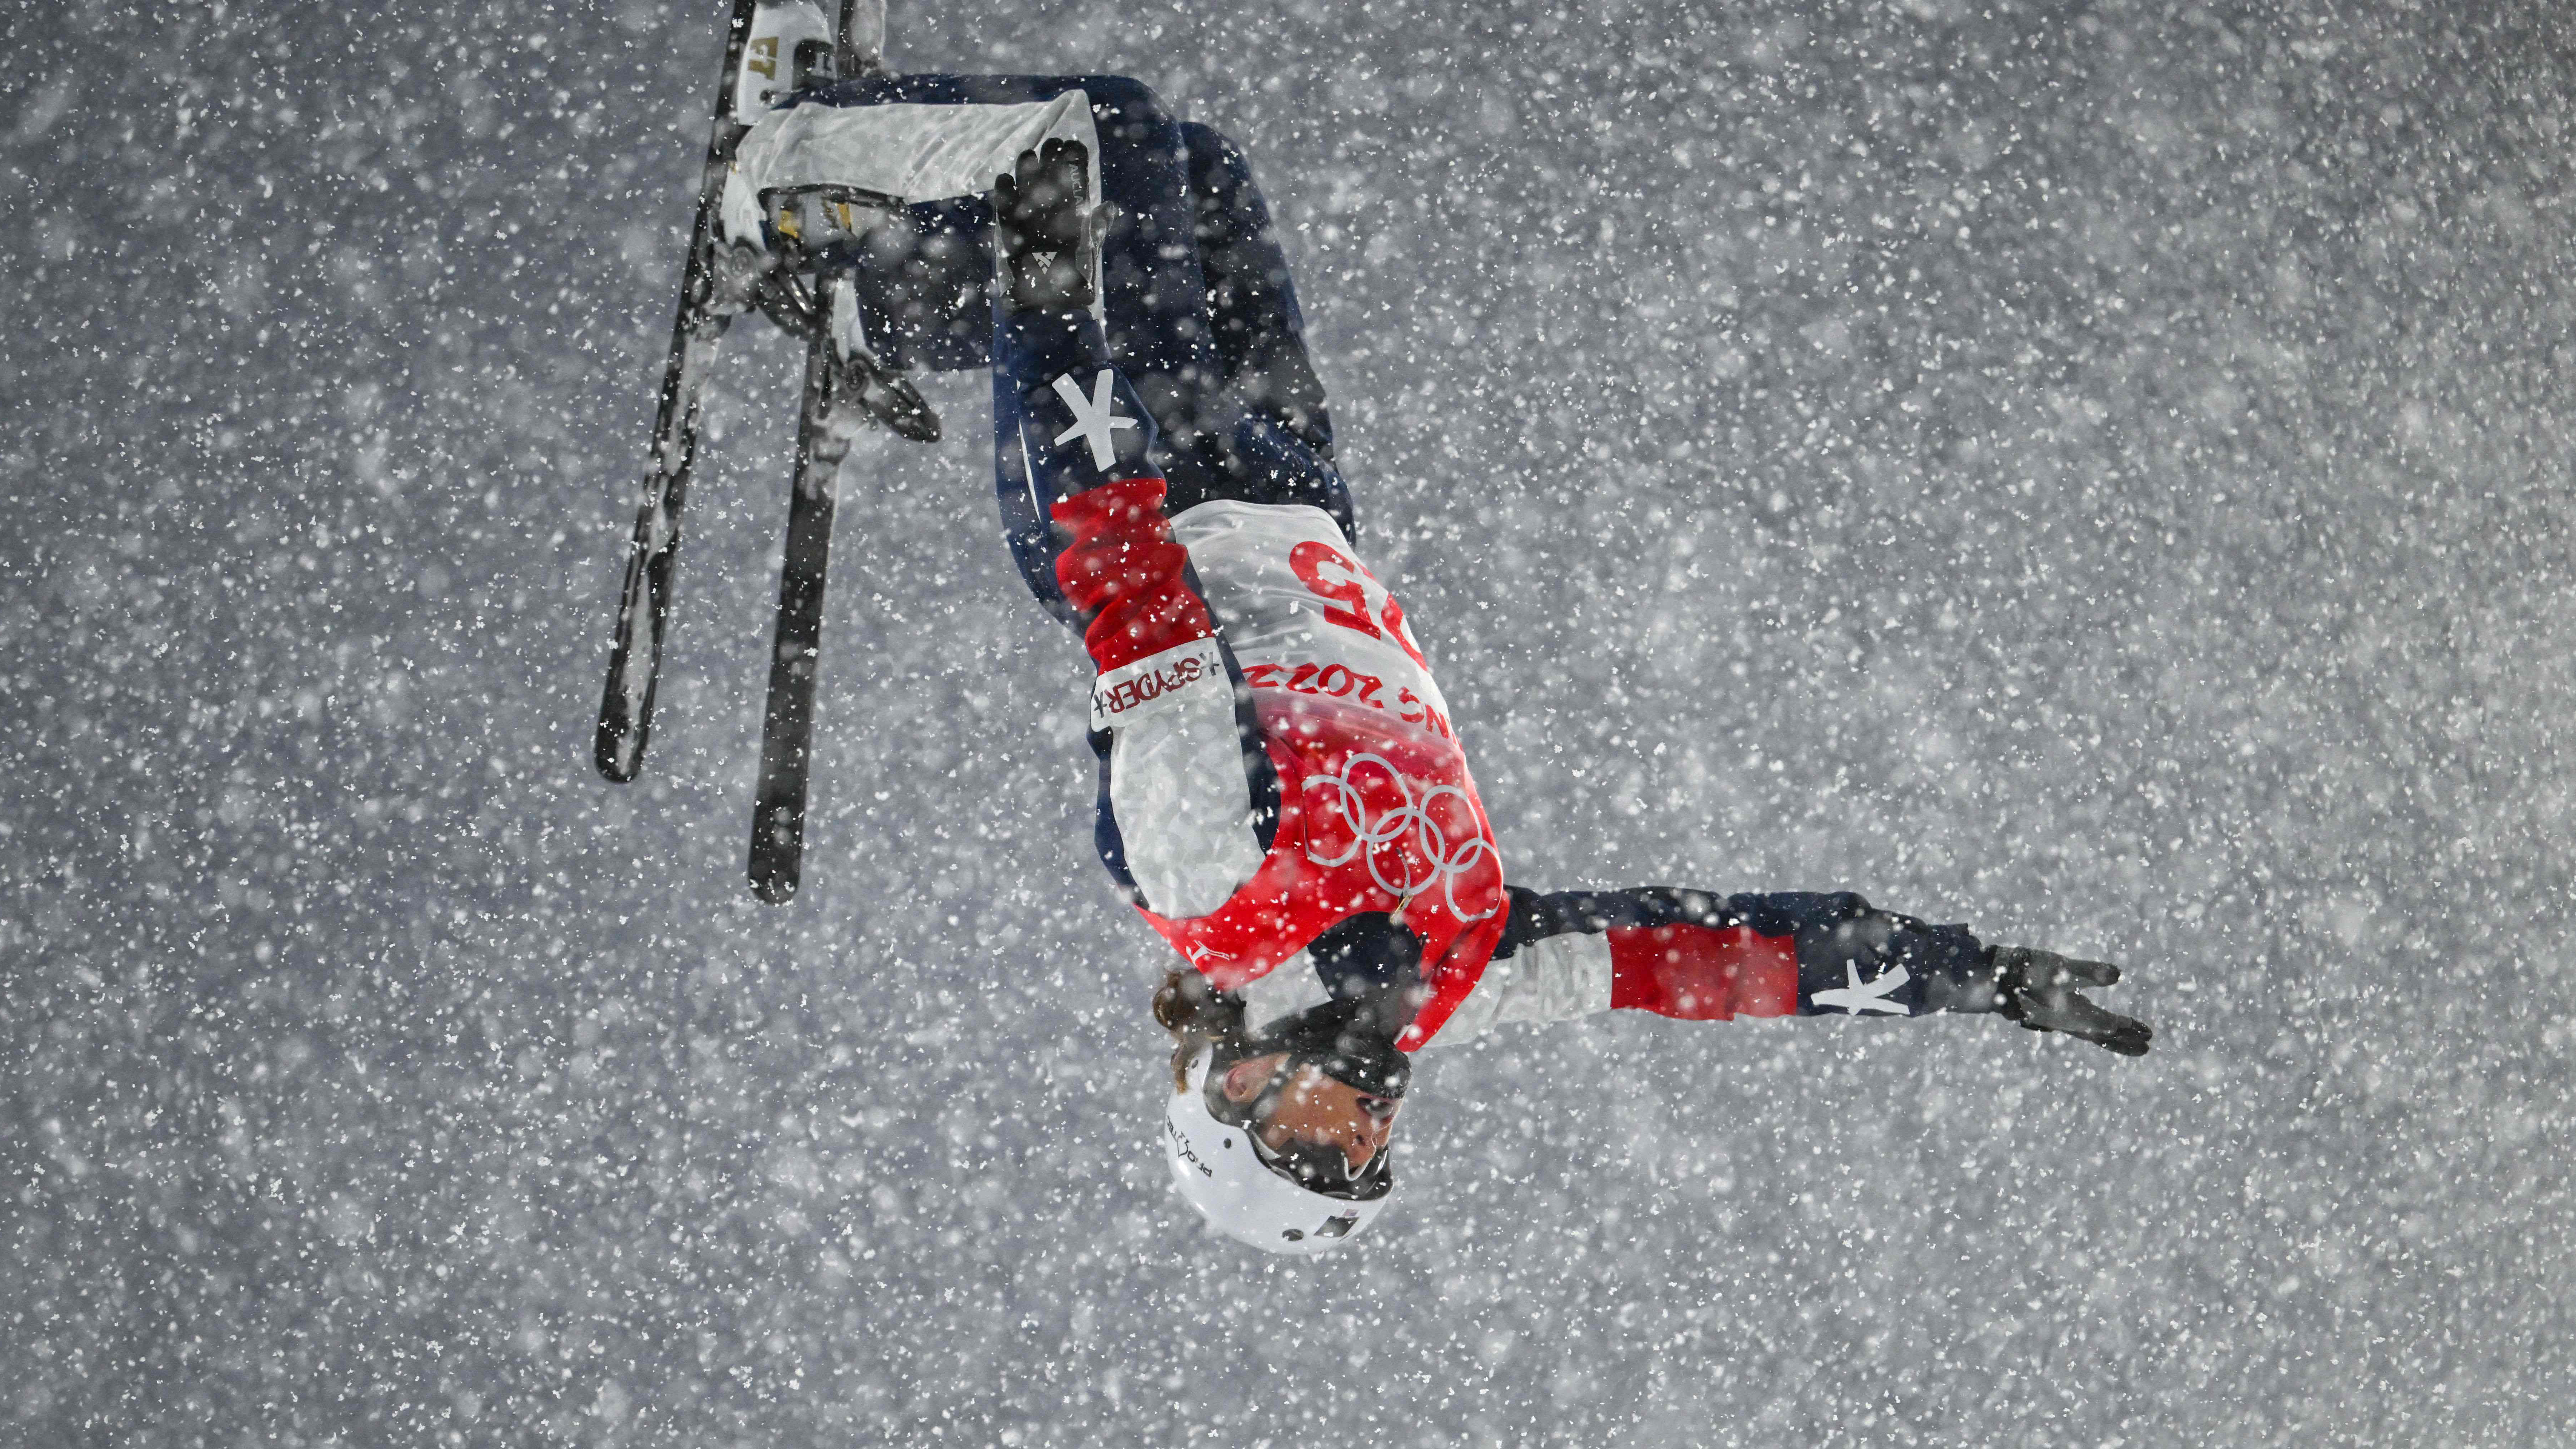 Snow Postpones Women's Aerials at 2022 Olympics